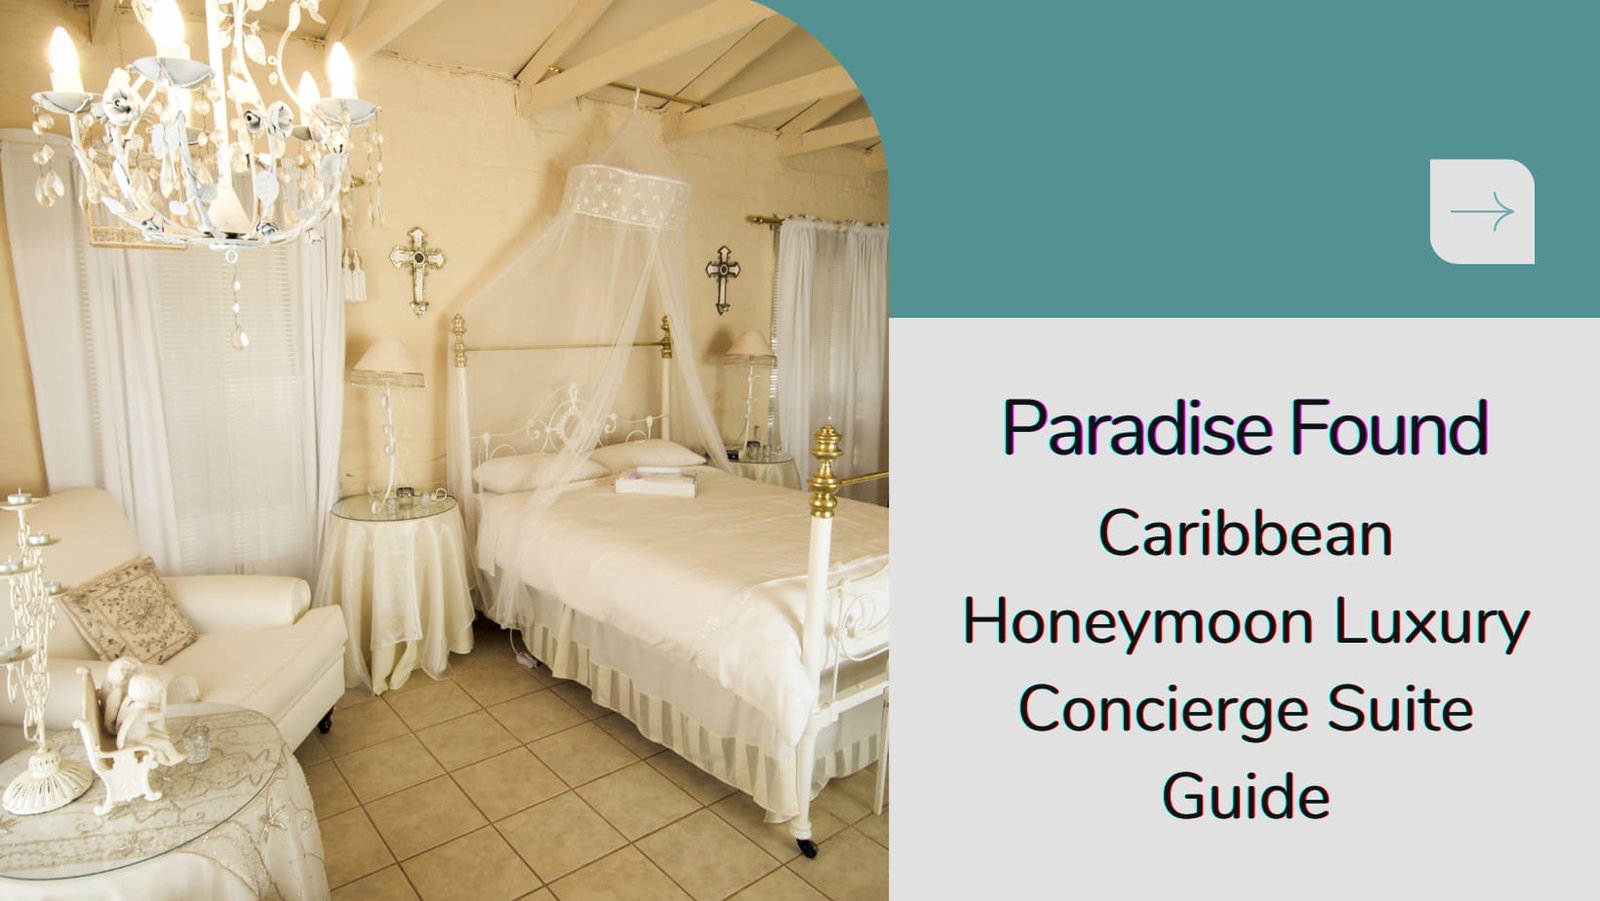 Paradise Found: Caribbean Honeymoon Luxury Concierge Suite Guide